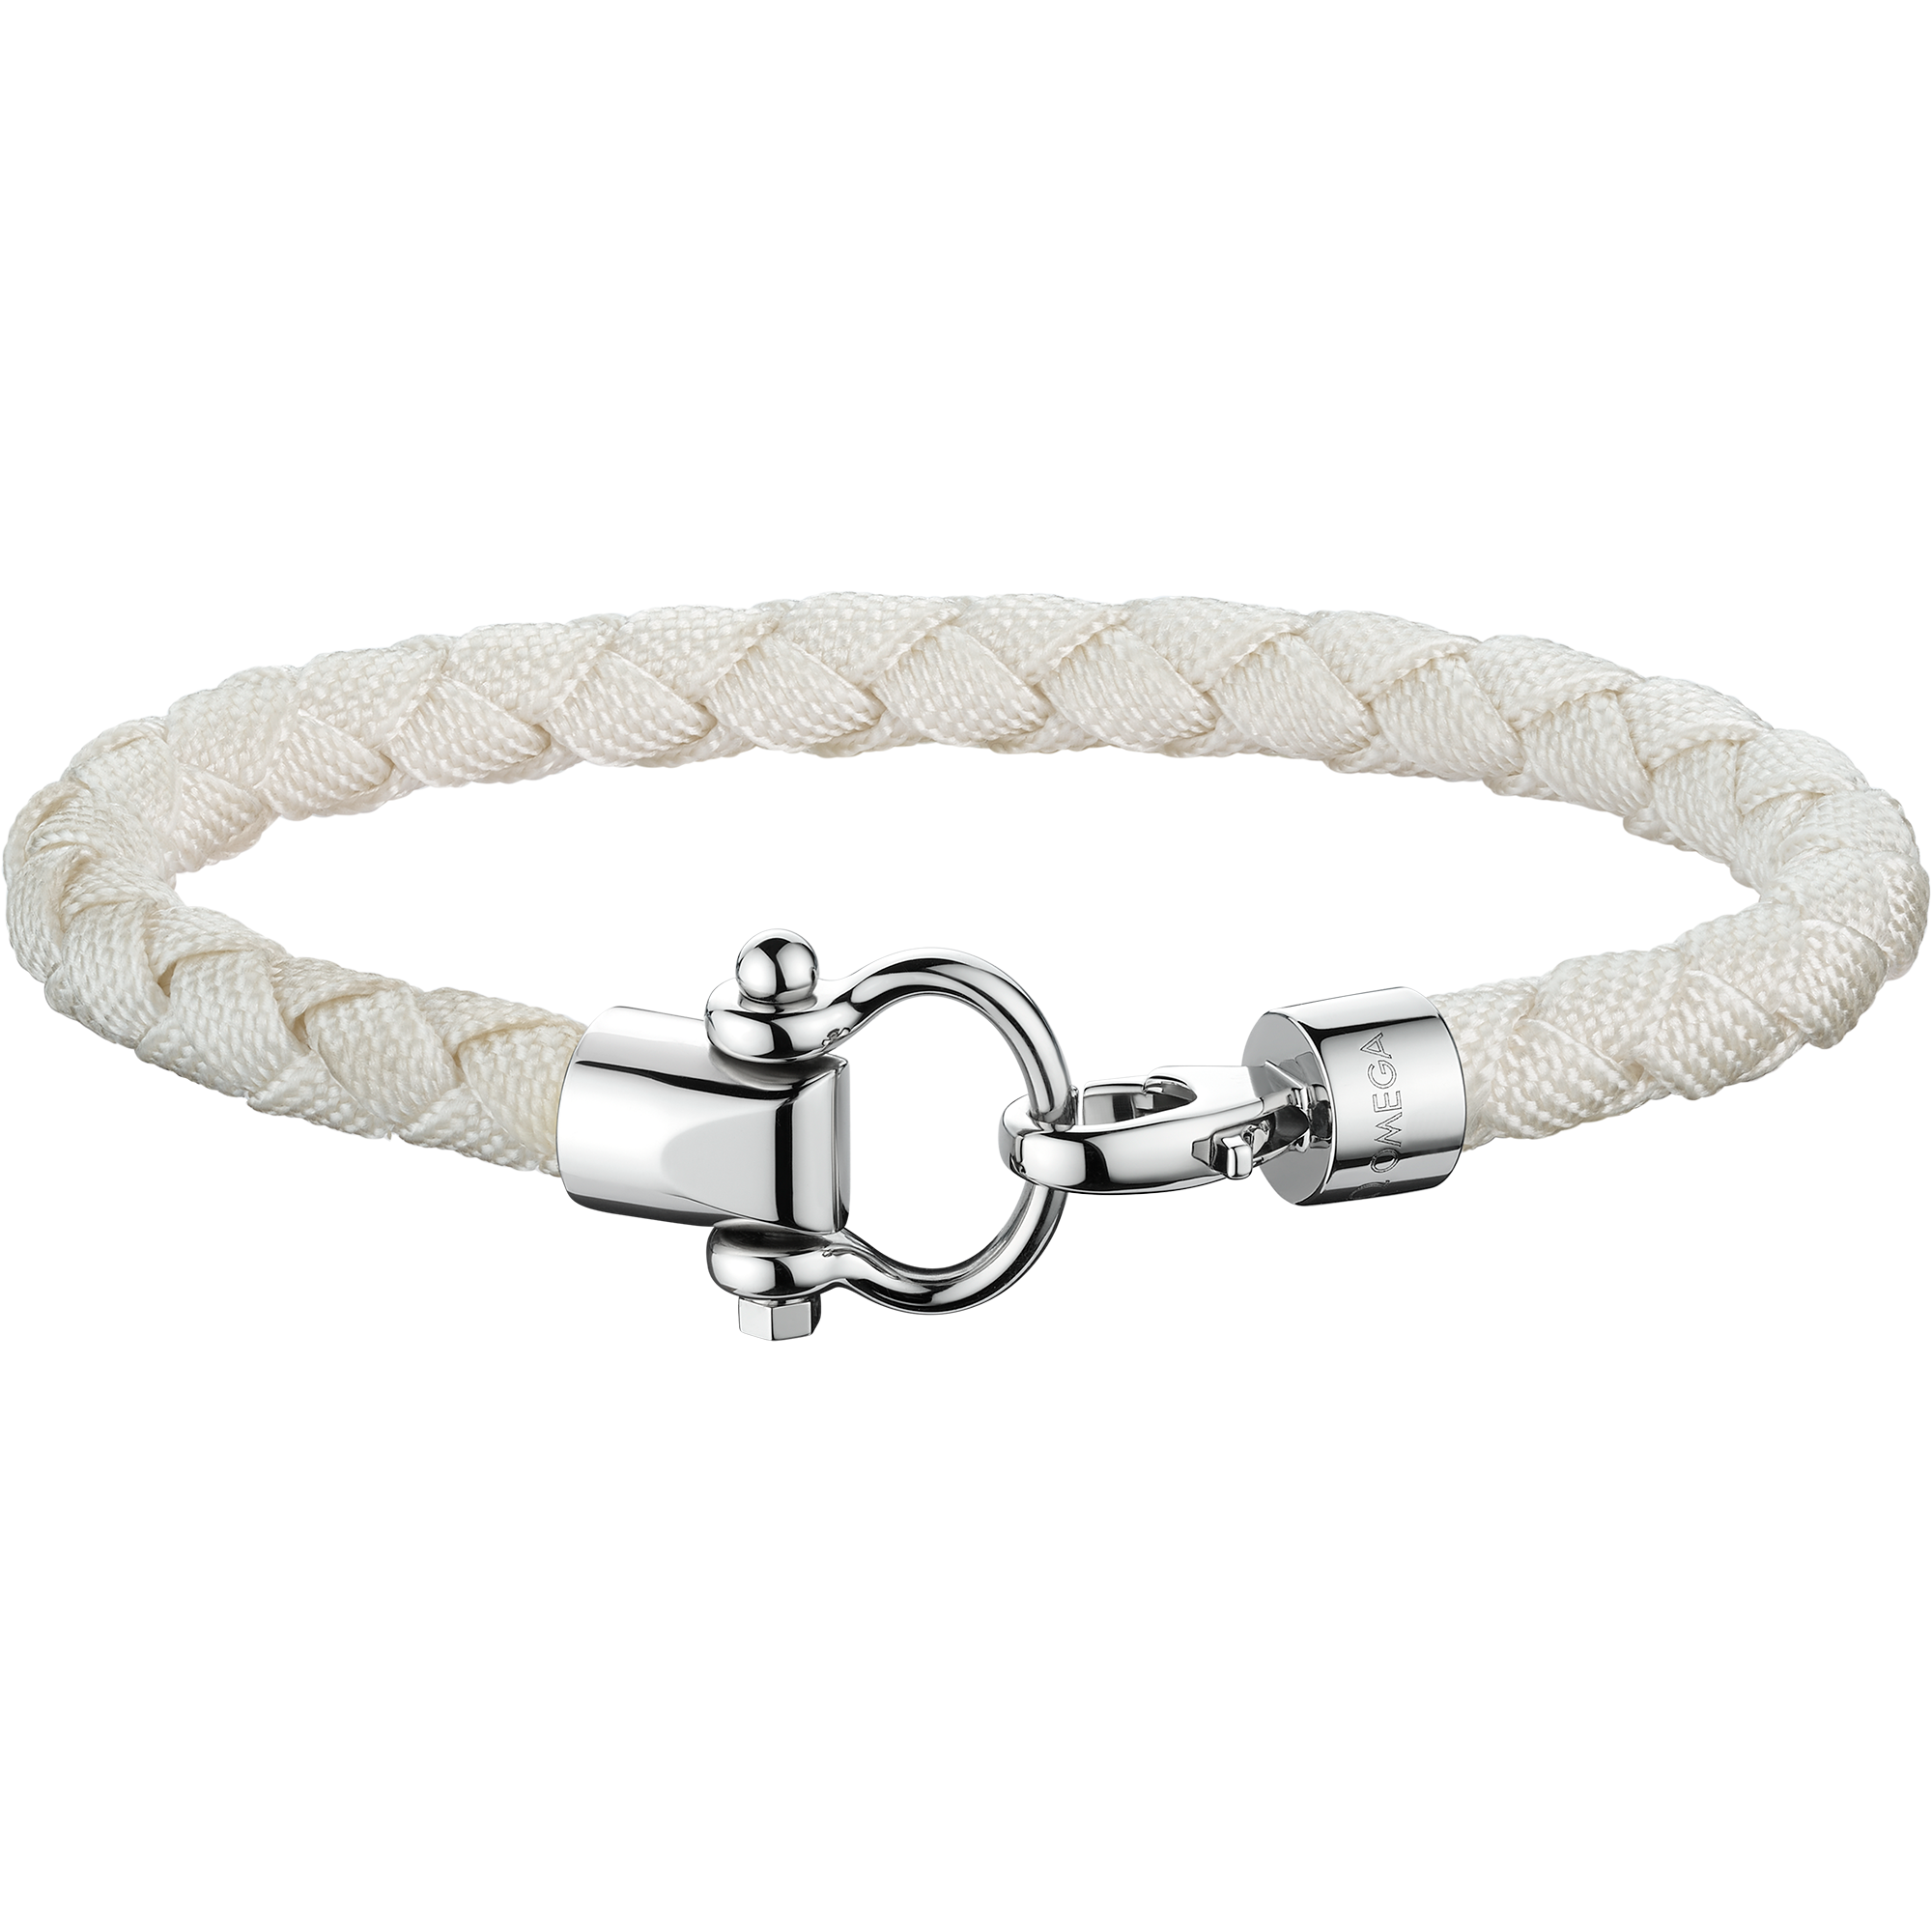 Omega Aqua Sailing Bracelet, Stainless steel, white braided nylon - BA05CW00004R2